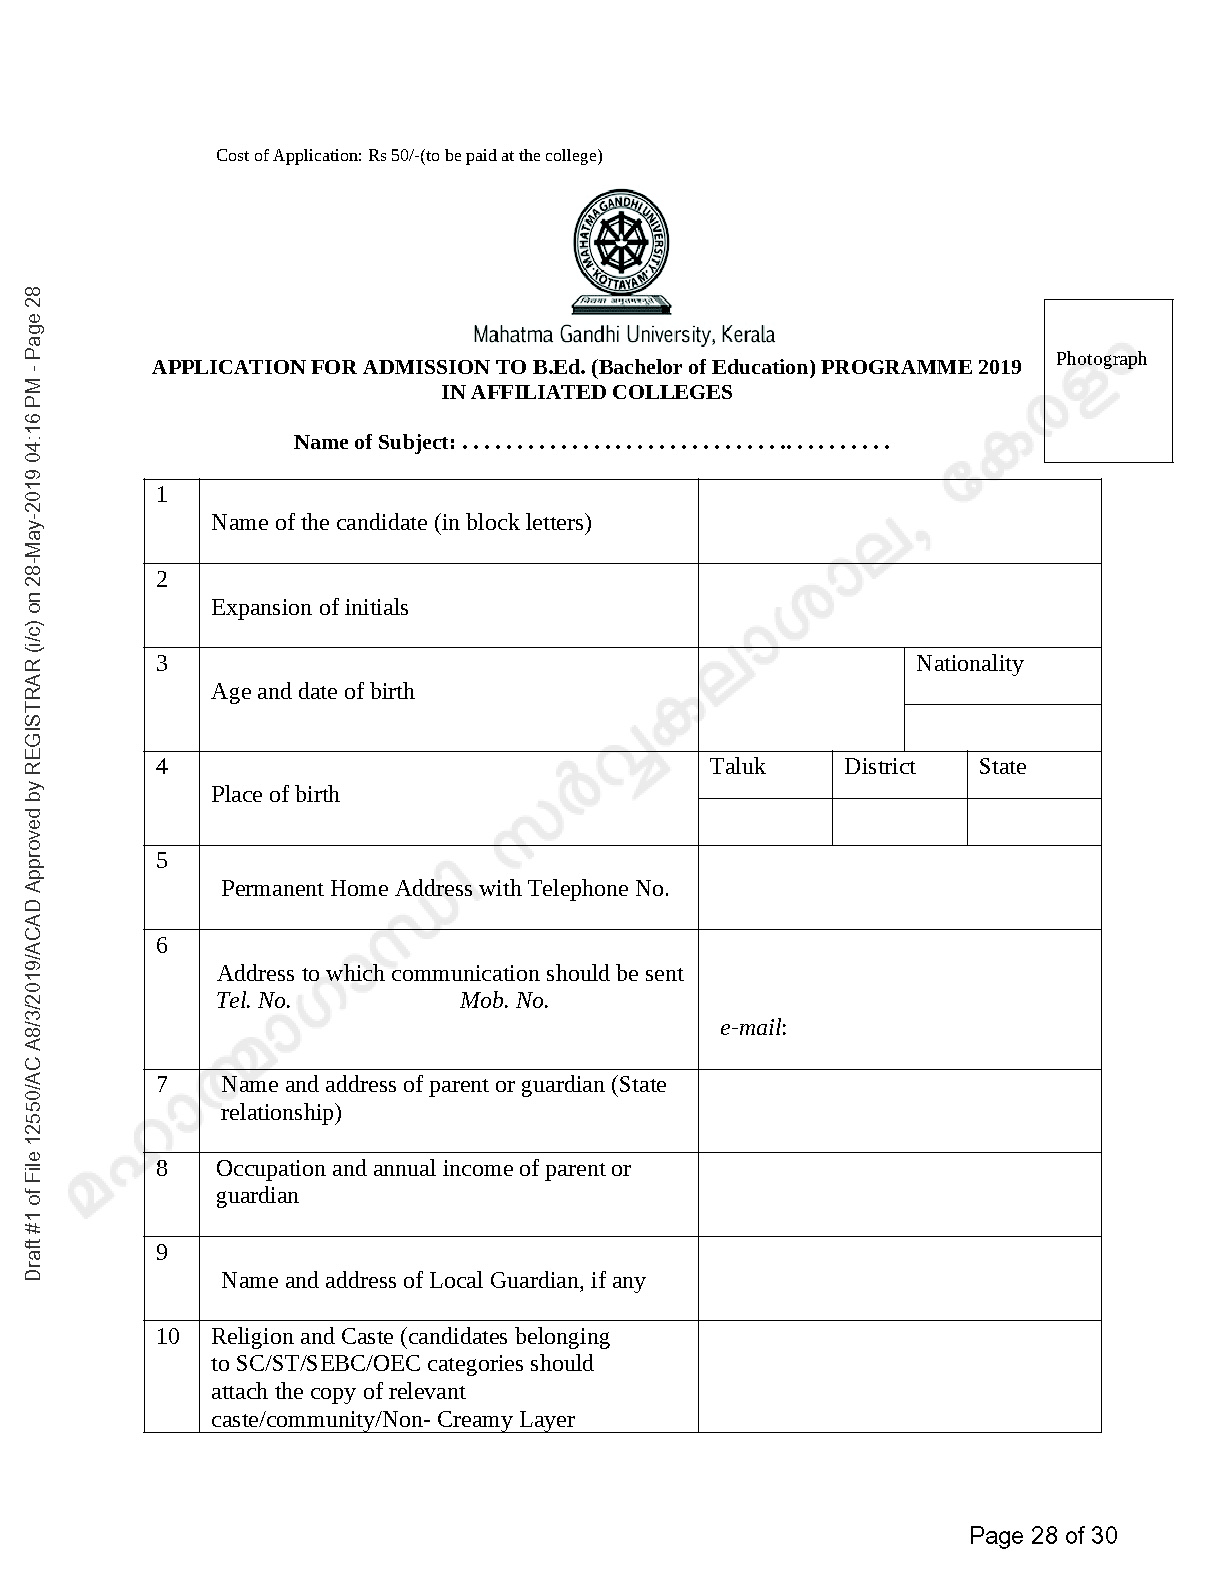 MG University B Ed Prospectus and Application form 2019 2020 - Notification Image 20